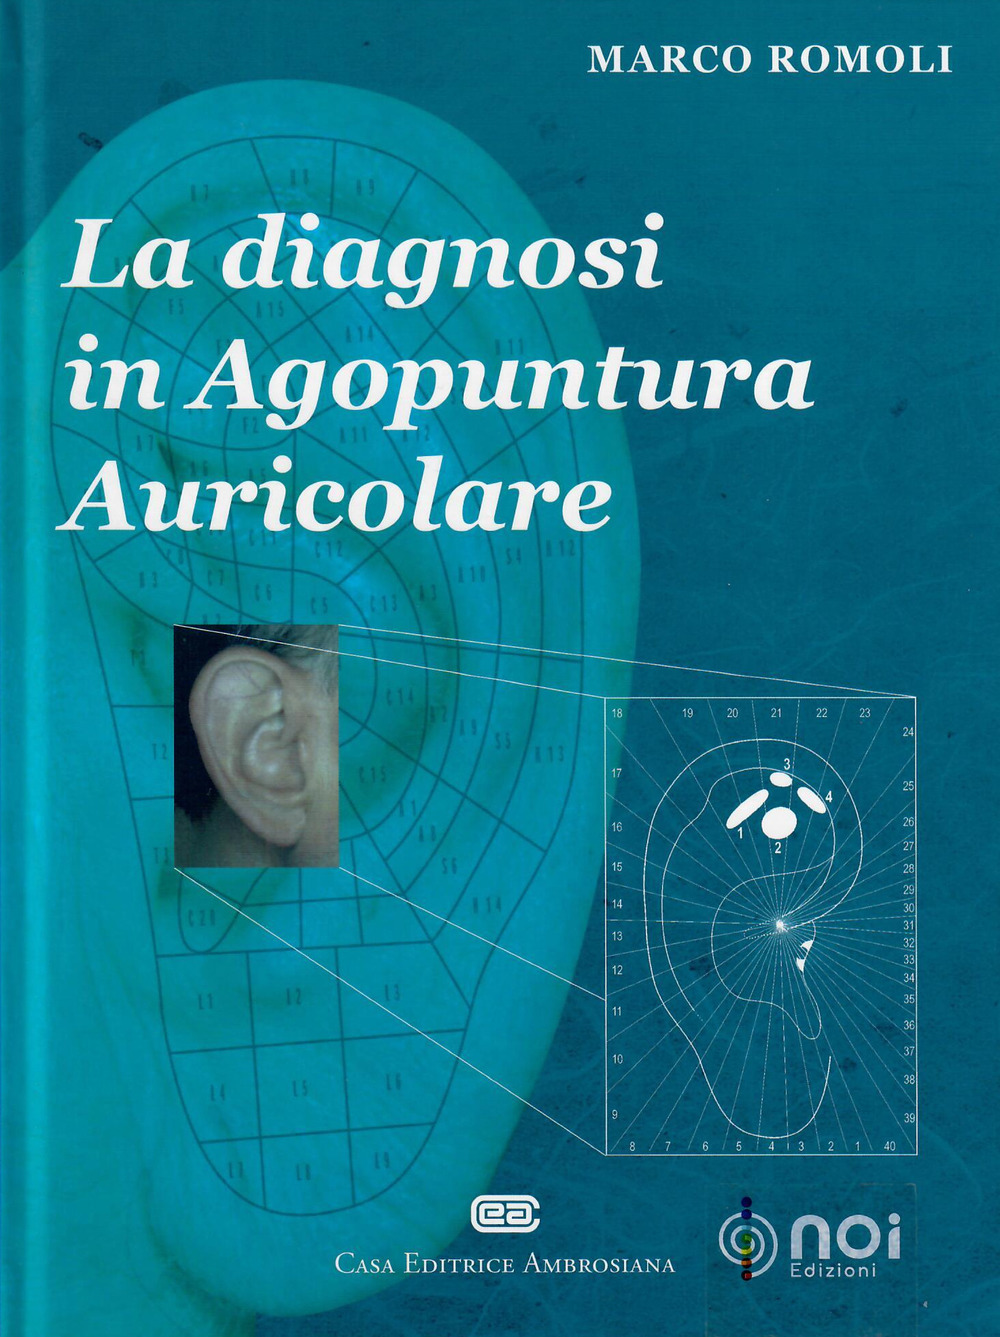 Image of La diagnosi in agopuntura auricolare